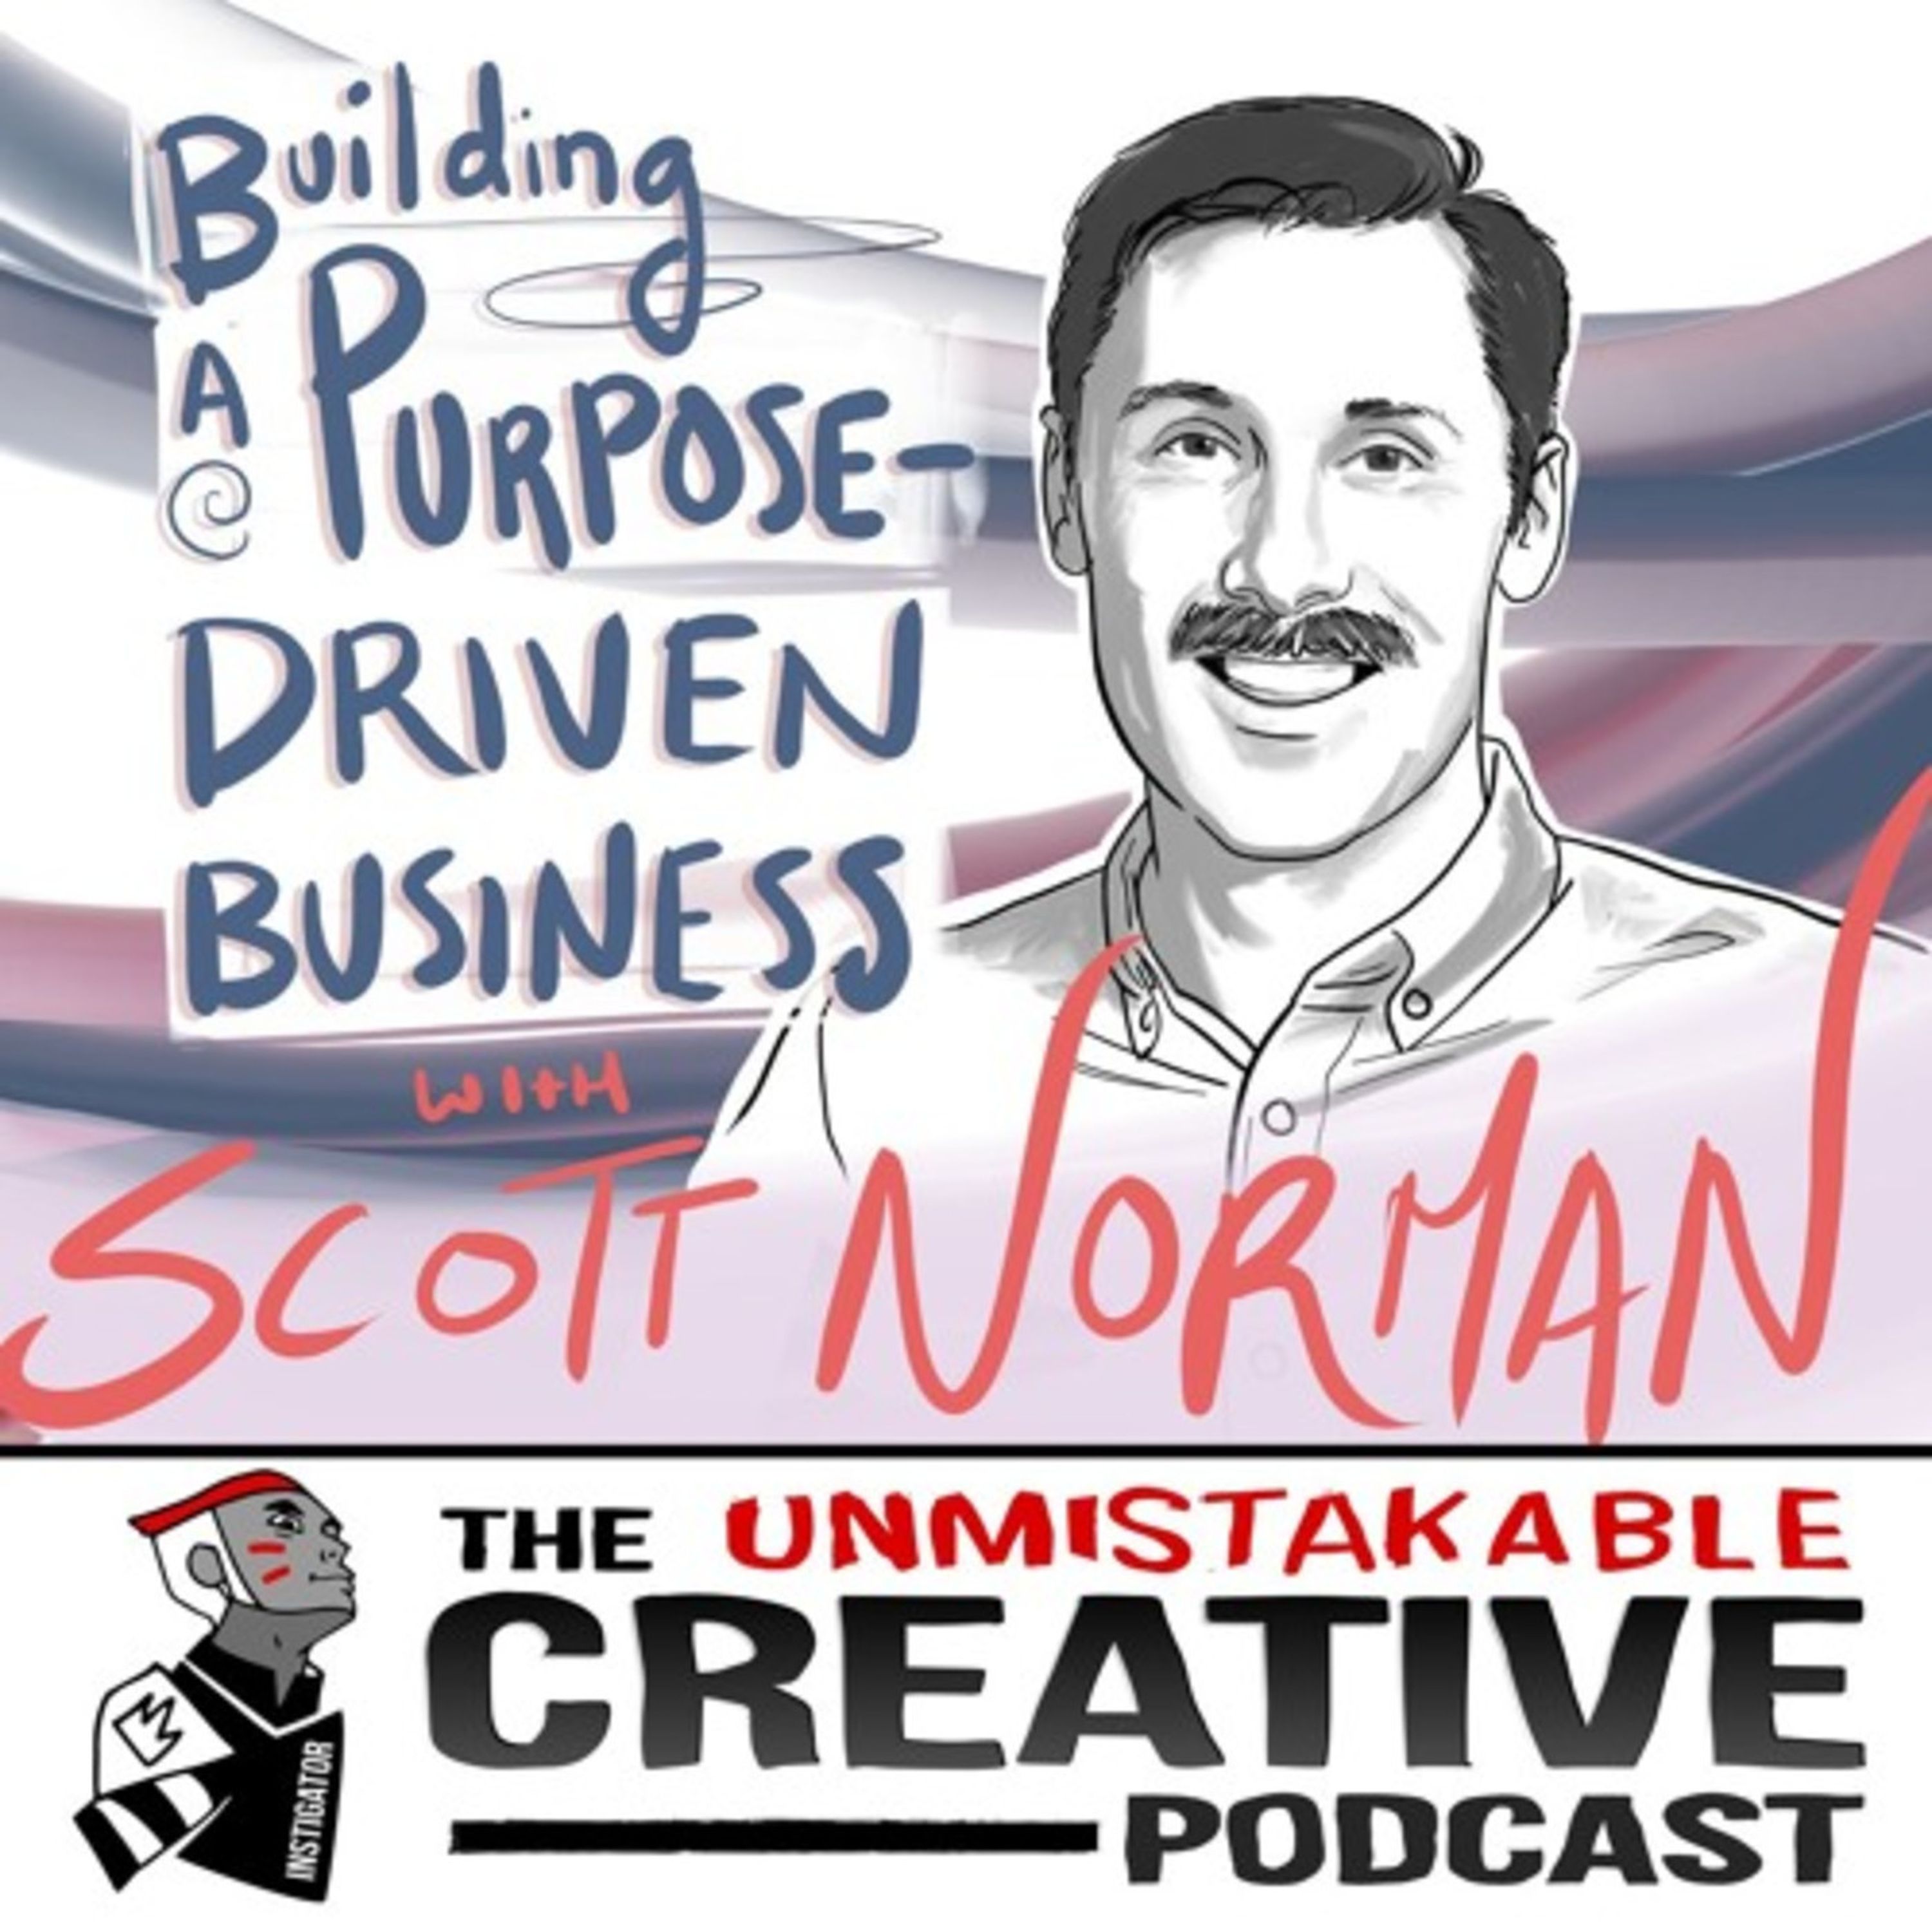 Scott Norton: Building a Purpose Driven Business Image